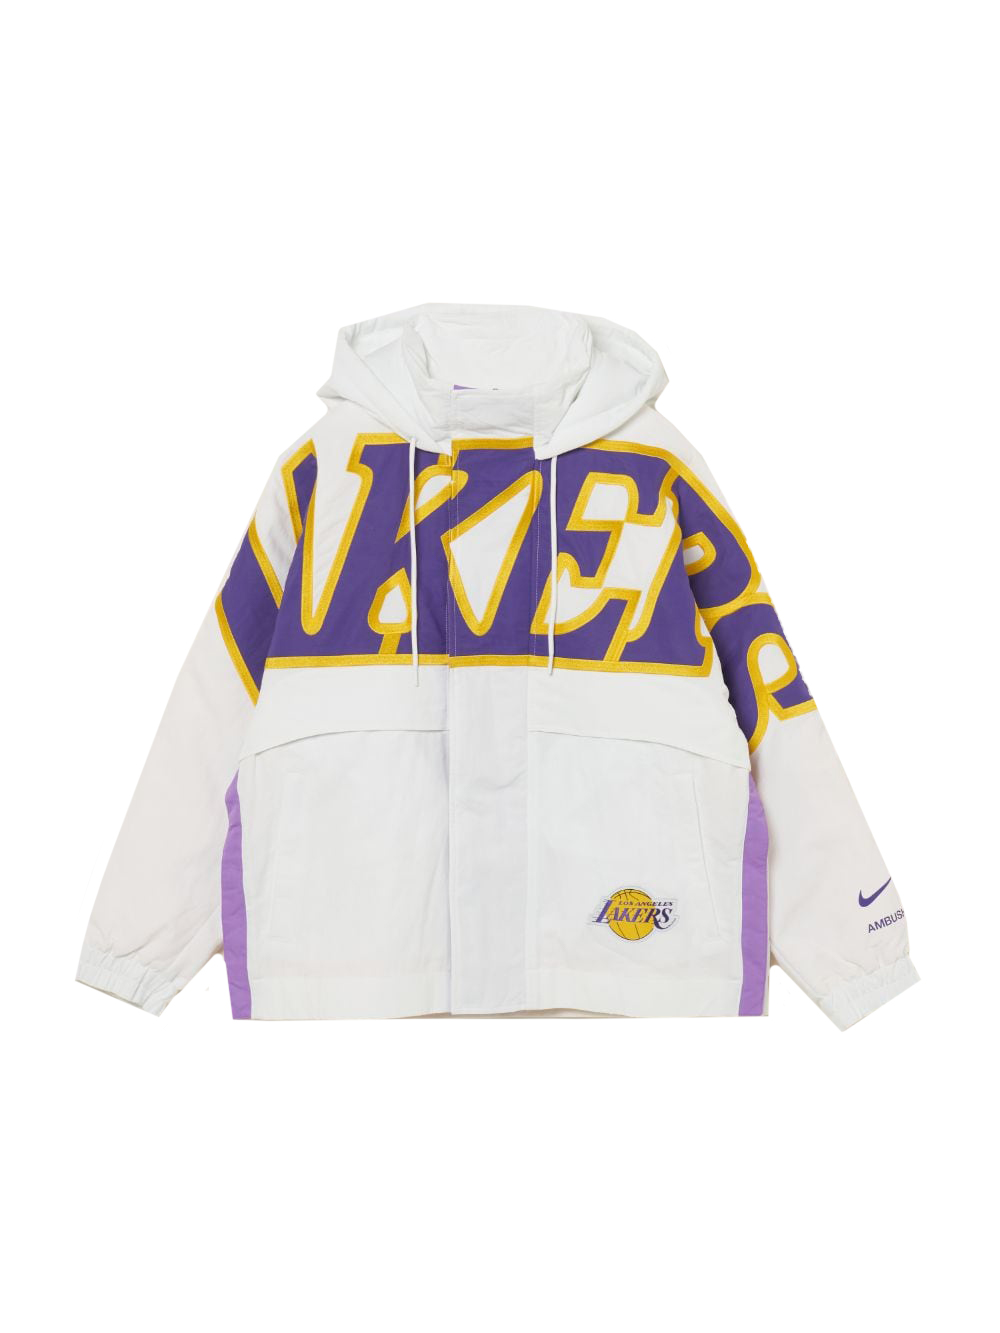 Nike x Ambush NBA Collection Lakers Jacket White/Purple/Gold 